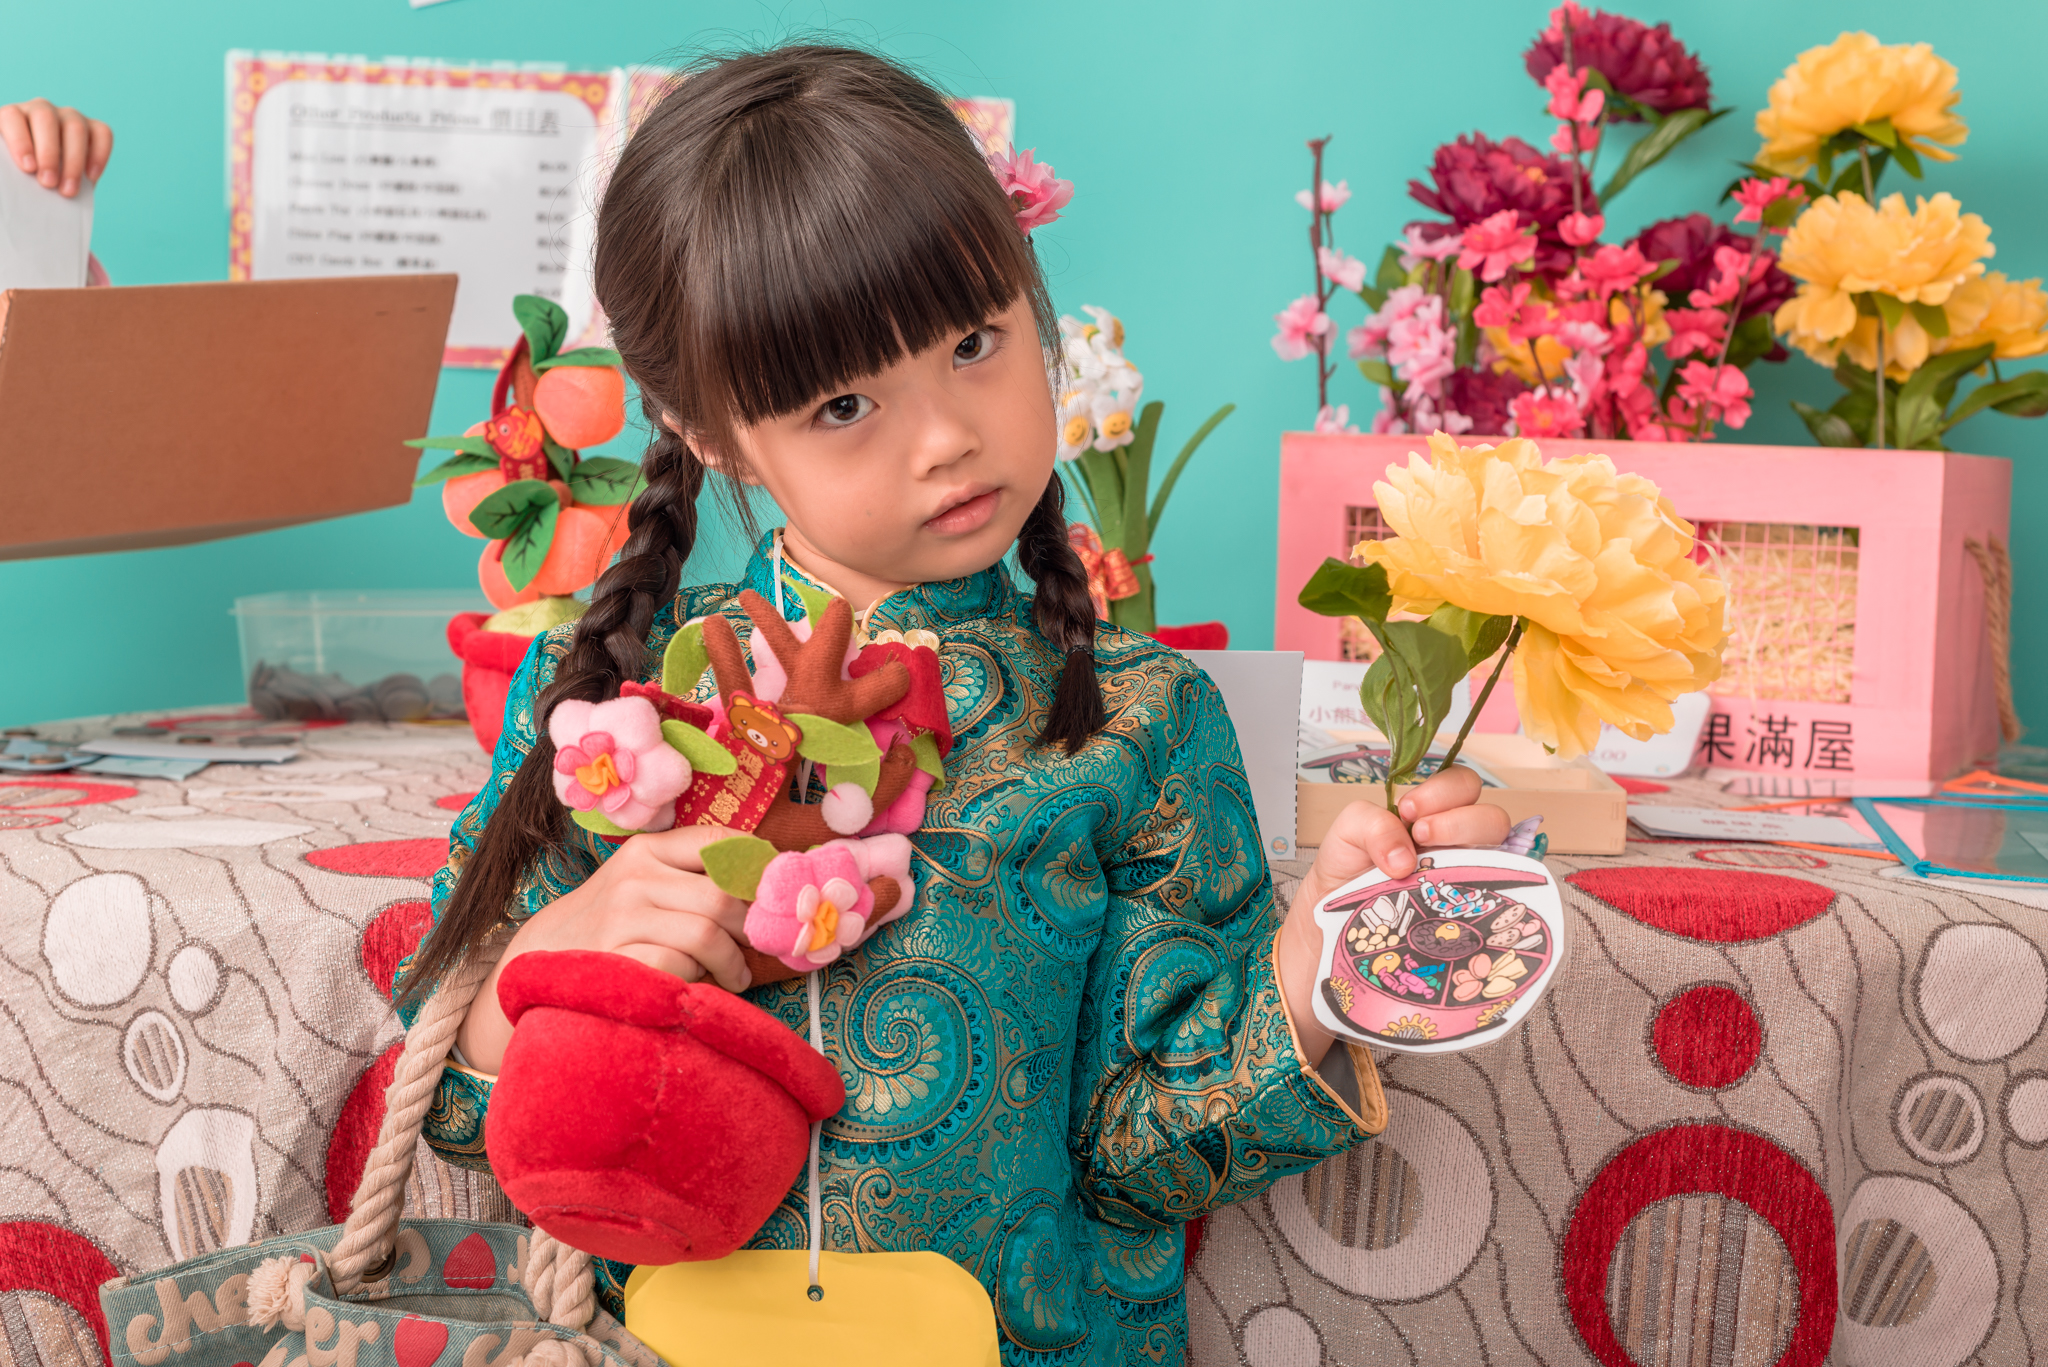 Chinese flower market pretend play